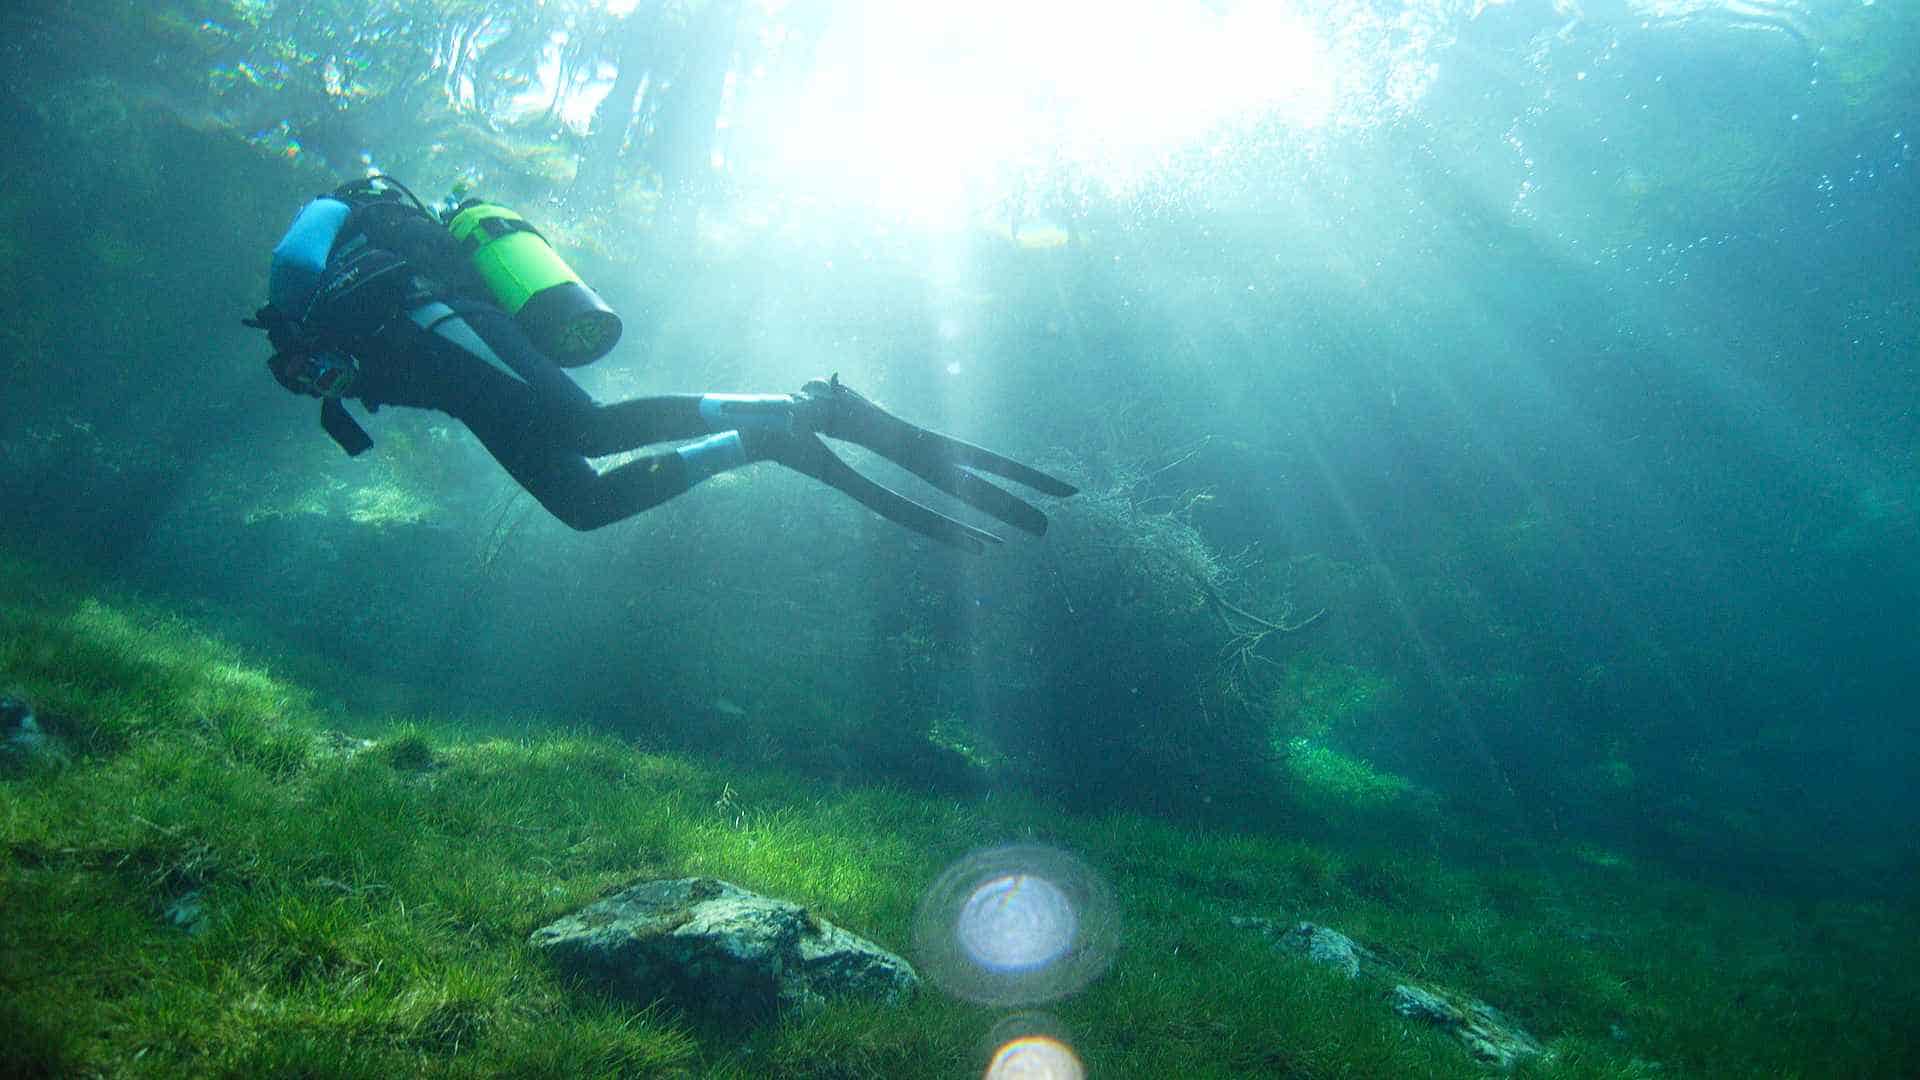 Scuba diver in the Green Lake in Austria.